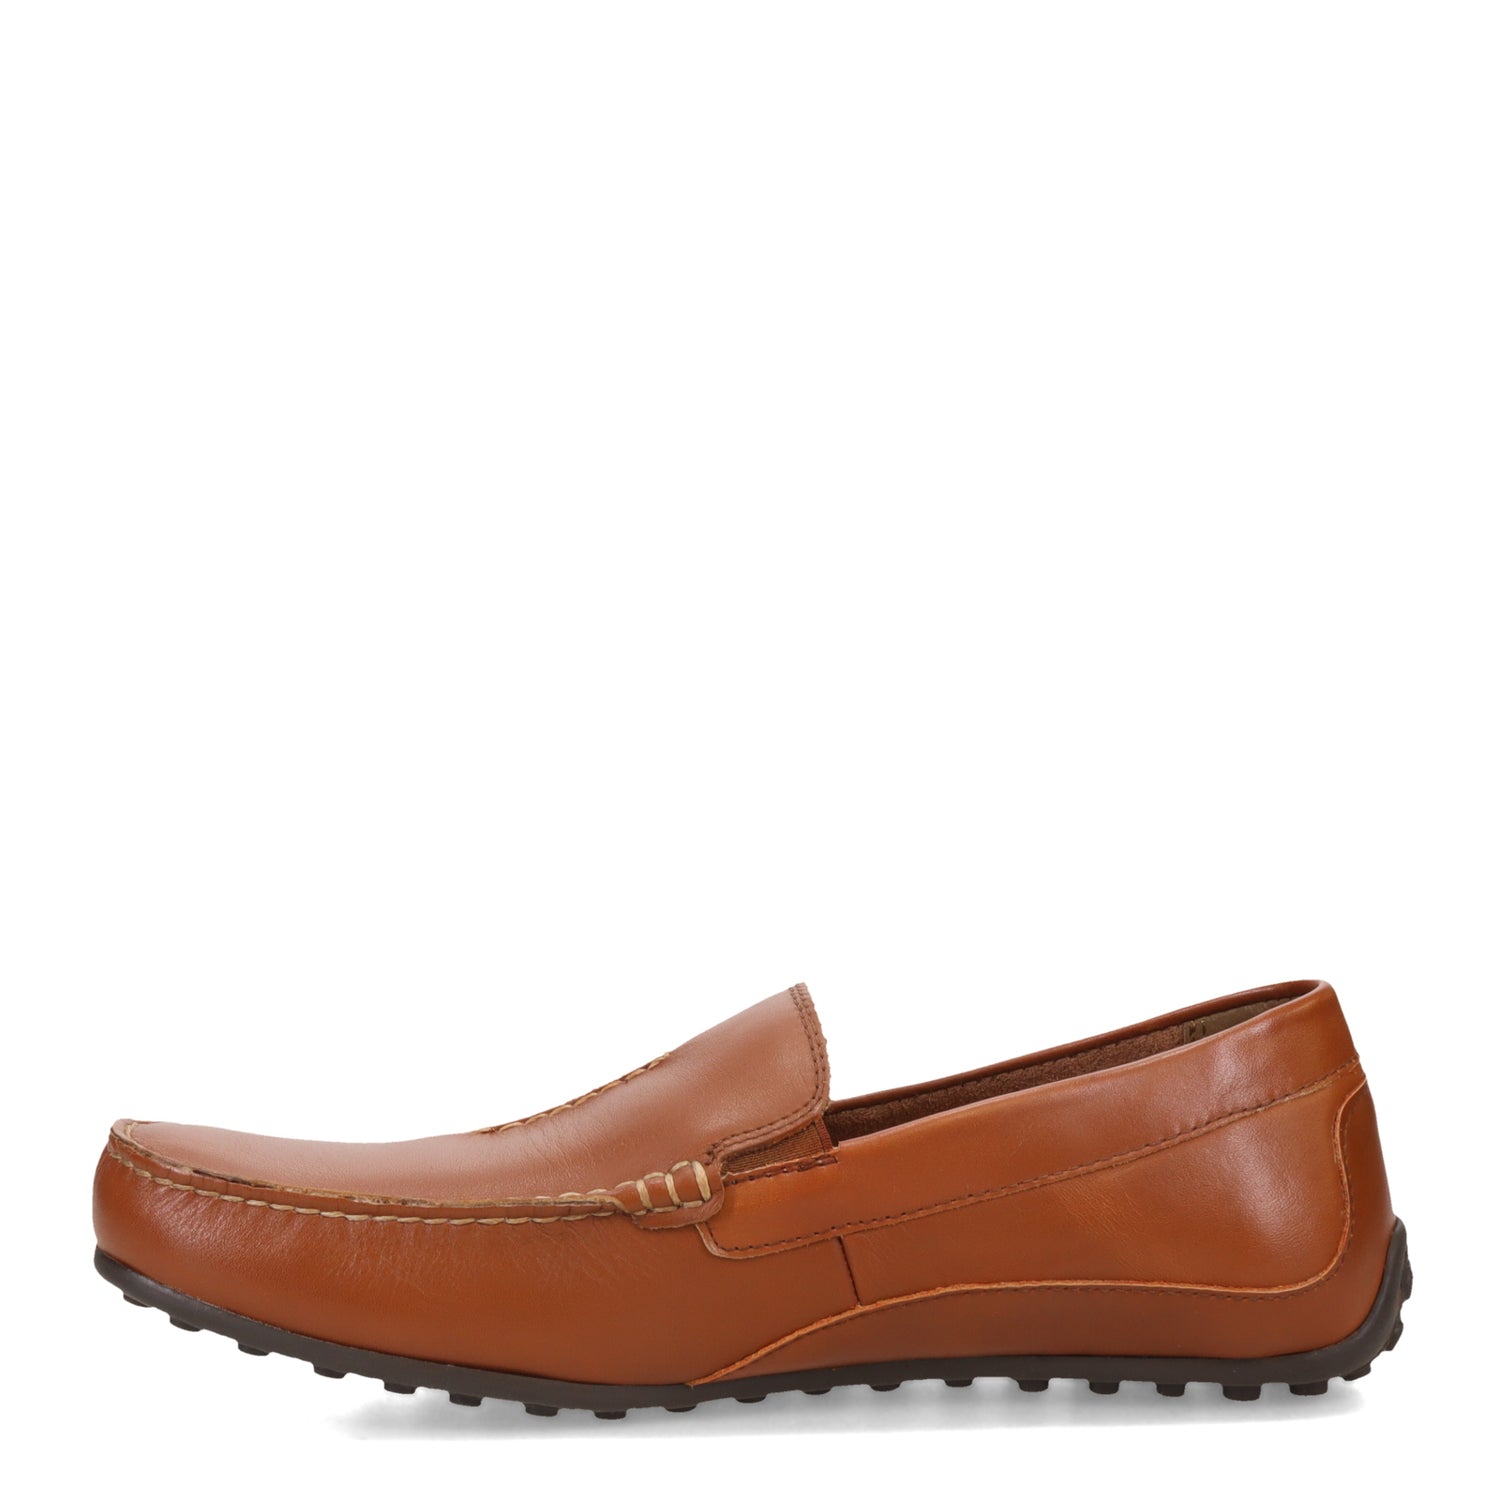 Peltz Shoes  Men's Florsheim Throttle Moc Toe Venetian Loafer Saddle Tan 11998-257